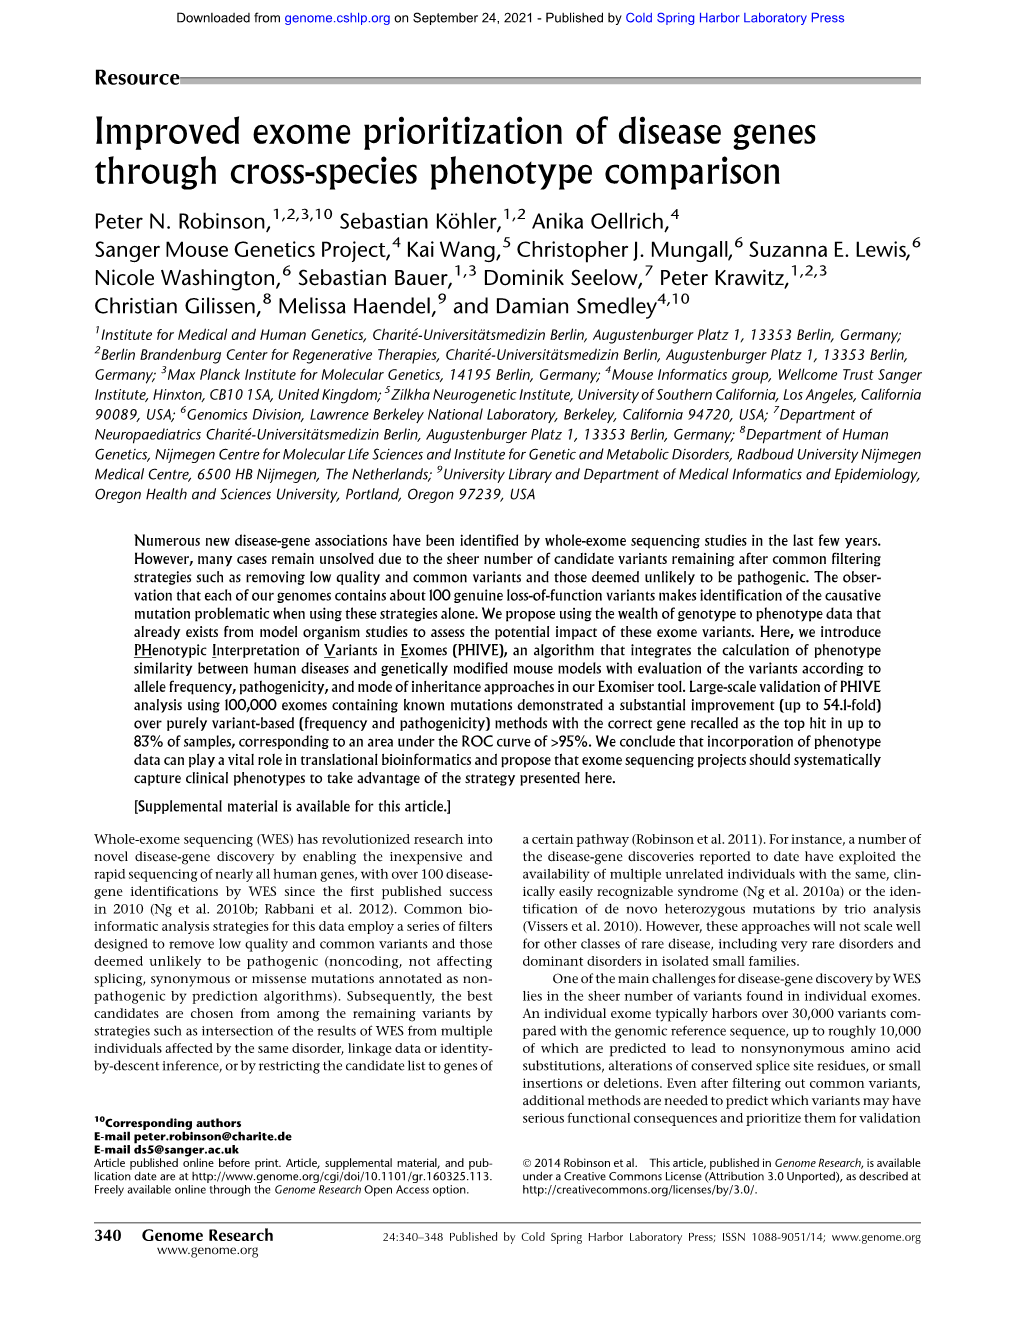 Improved Exome Prioritization of Disease Genes Through Cross-Species Phenotype Comparison